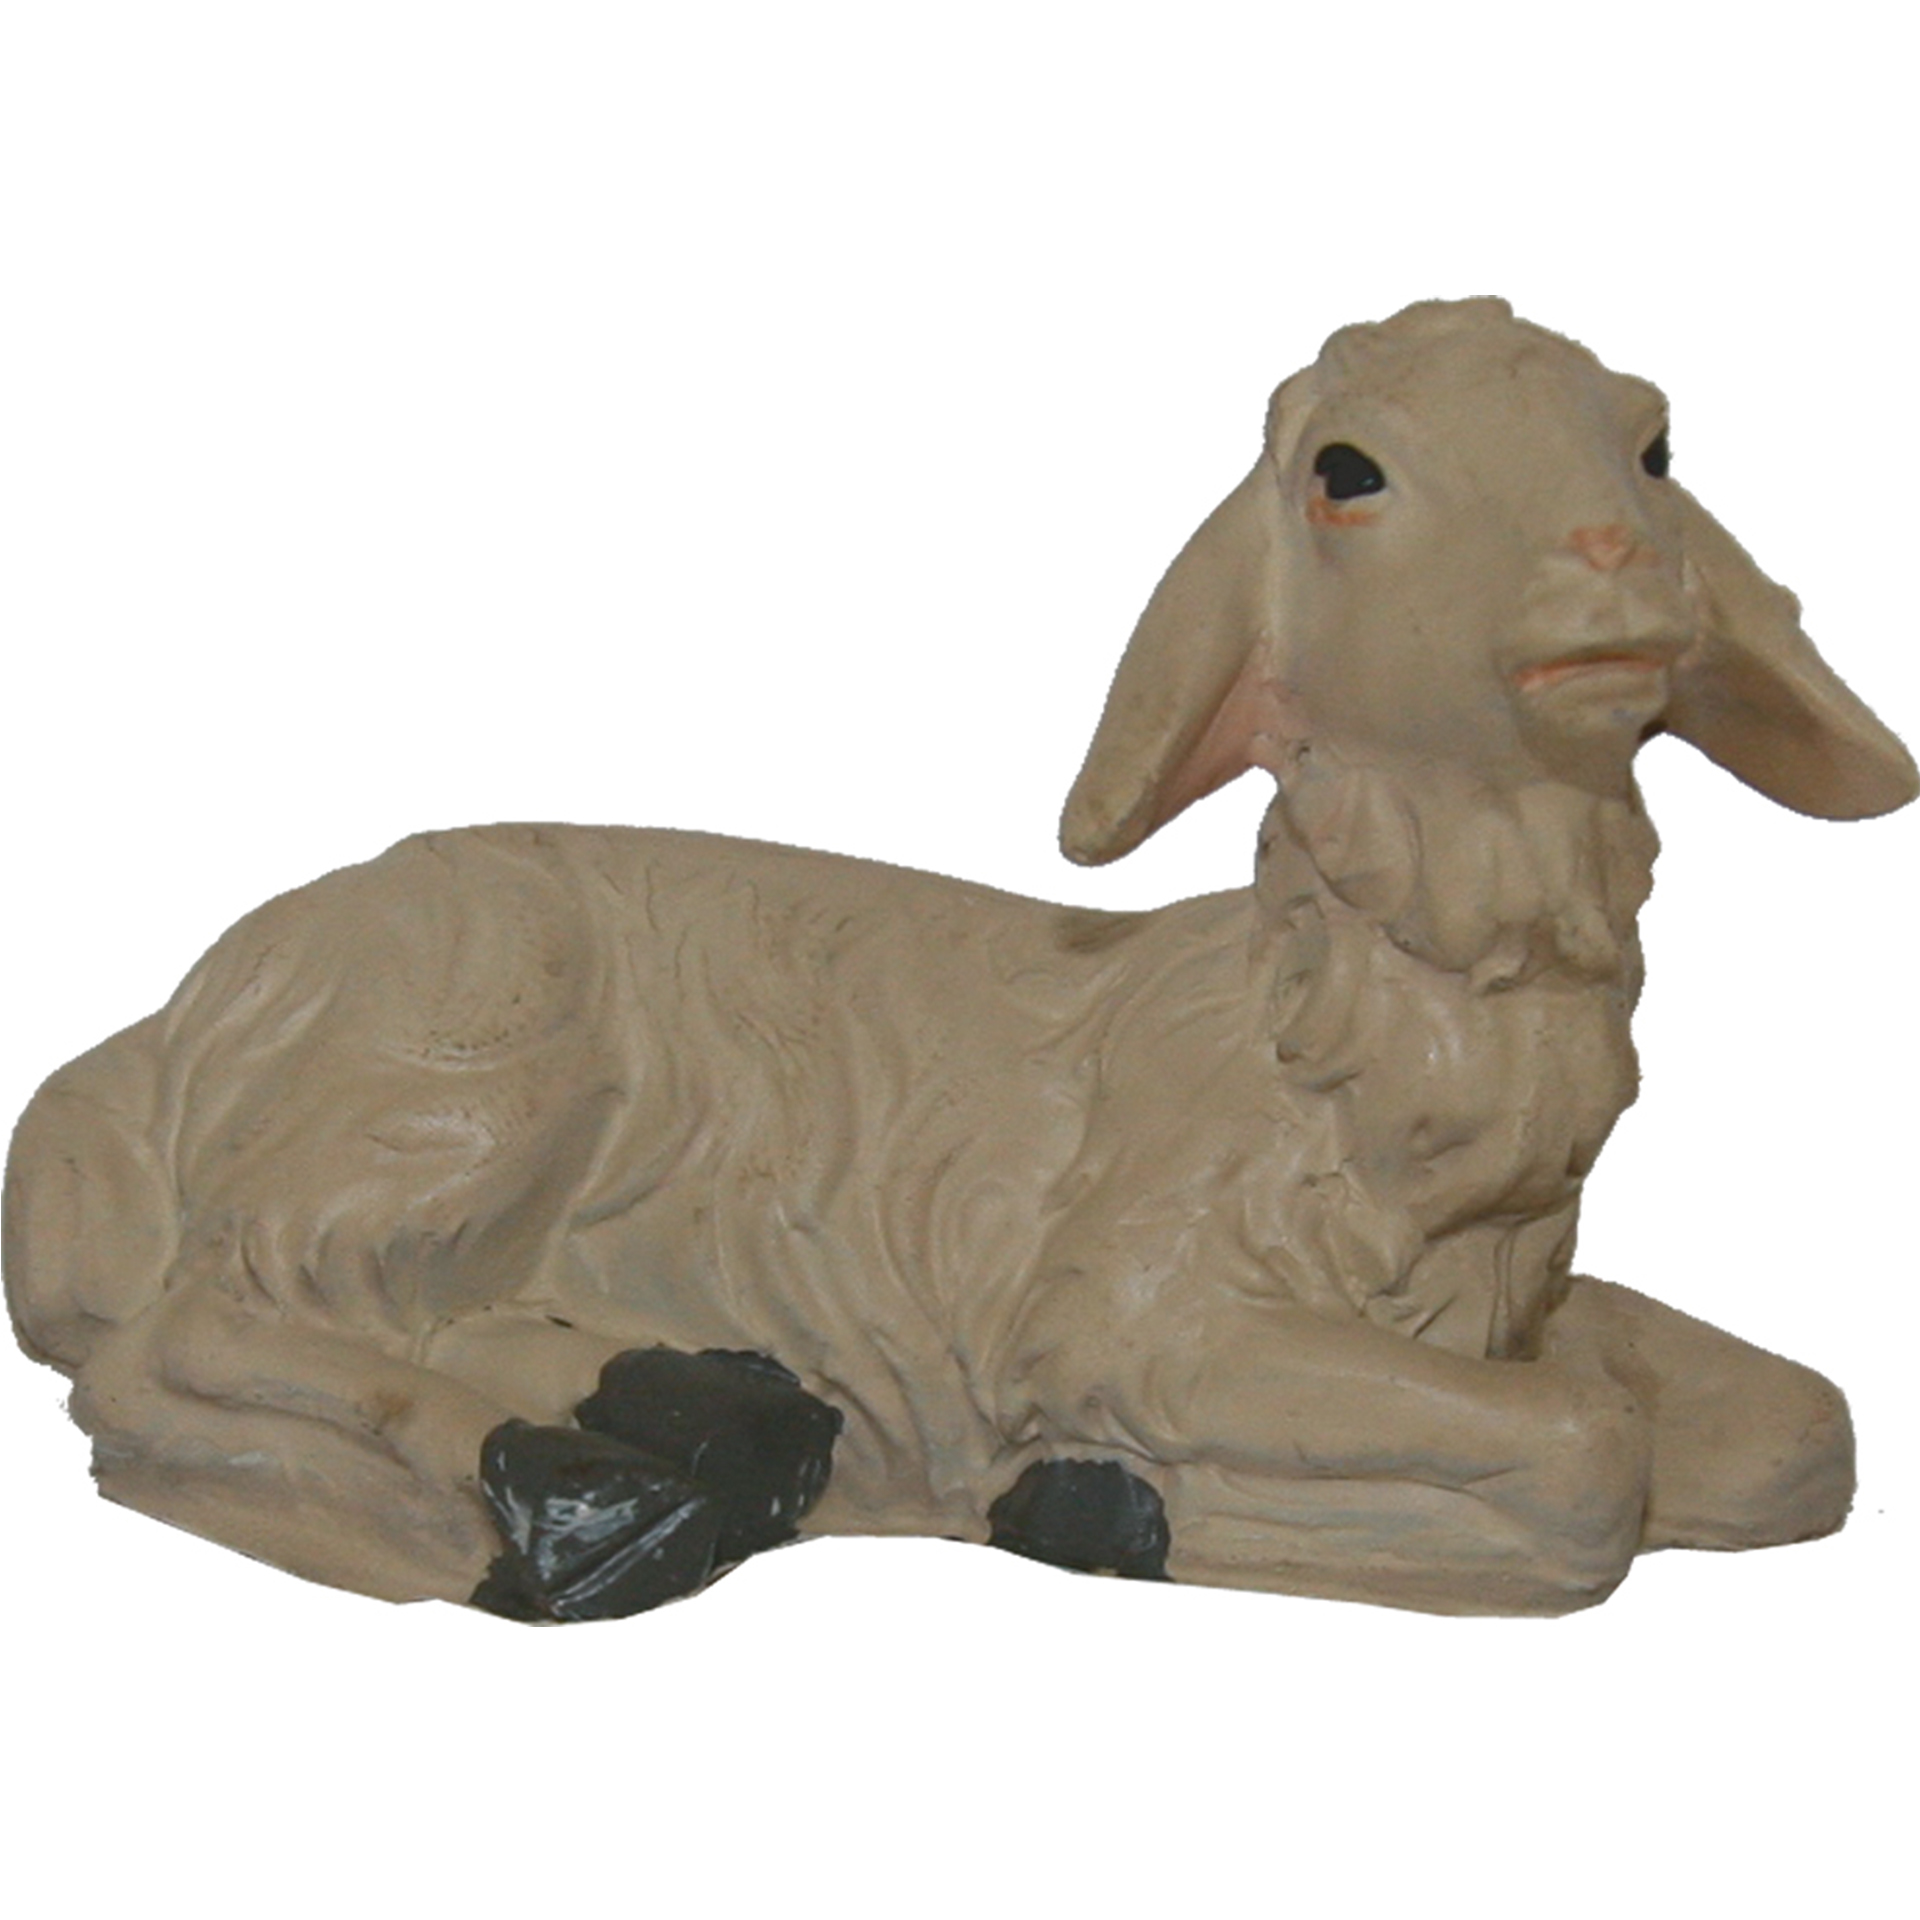 Schaf liegend Tierfigur Krippenfigur